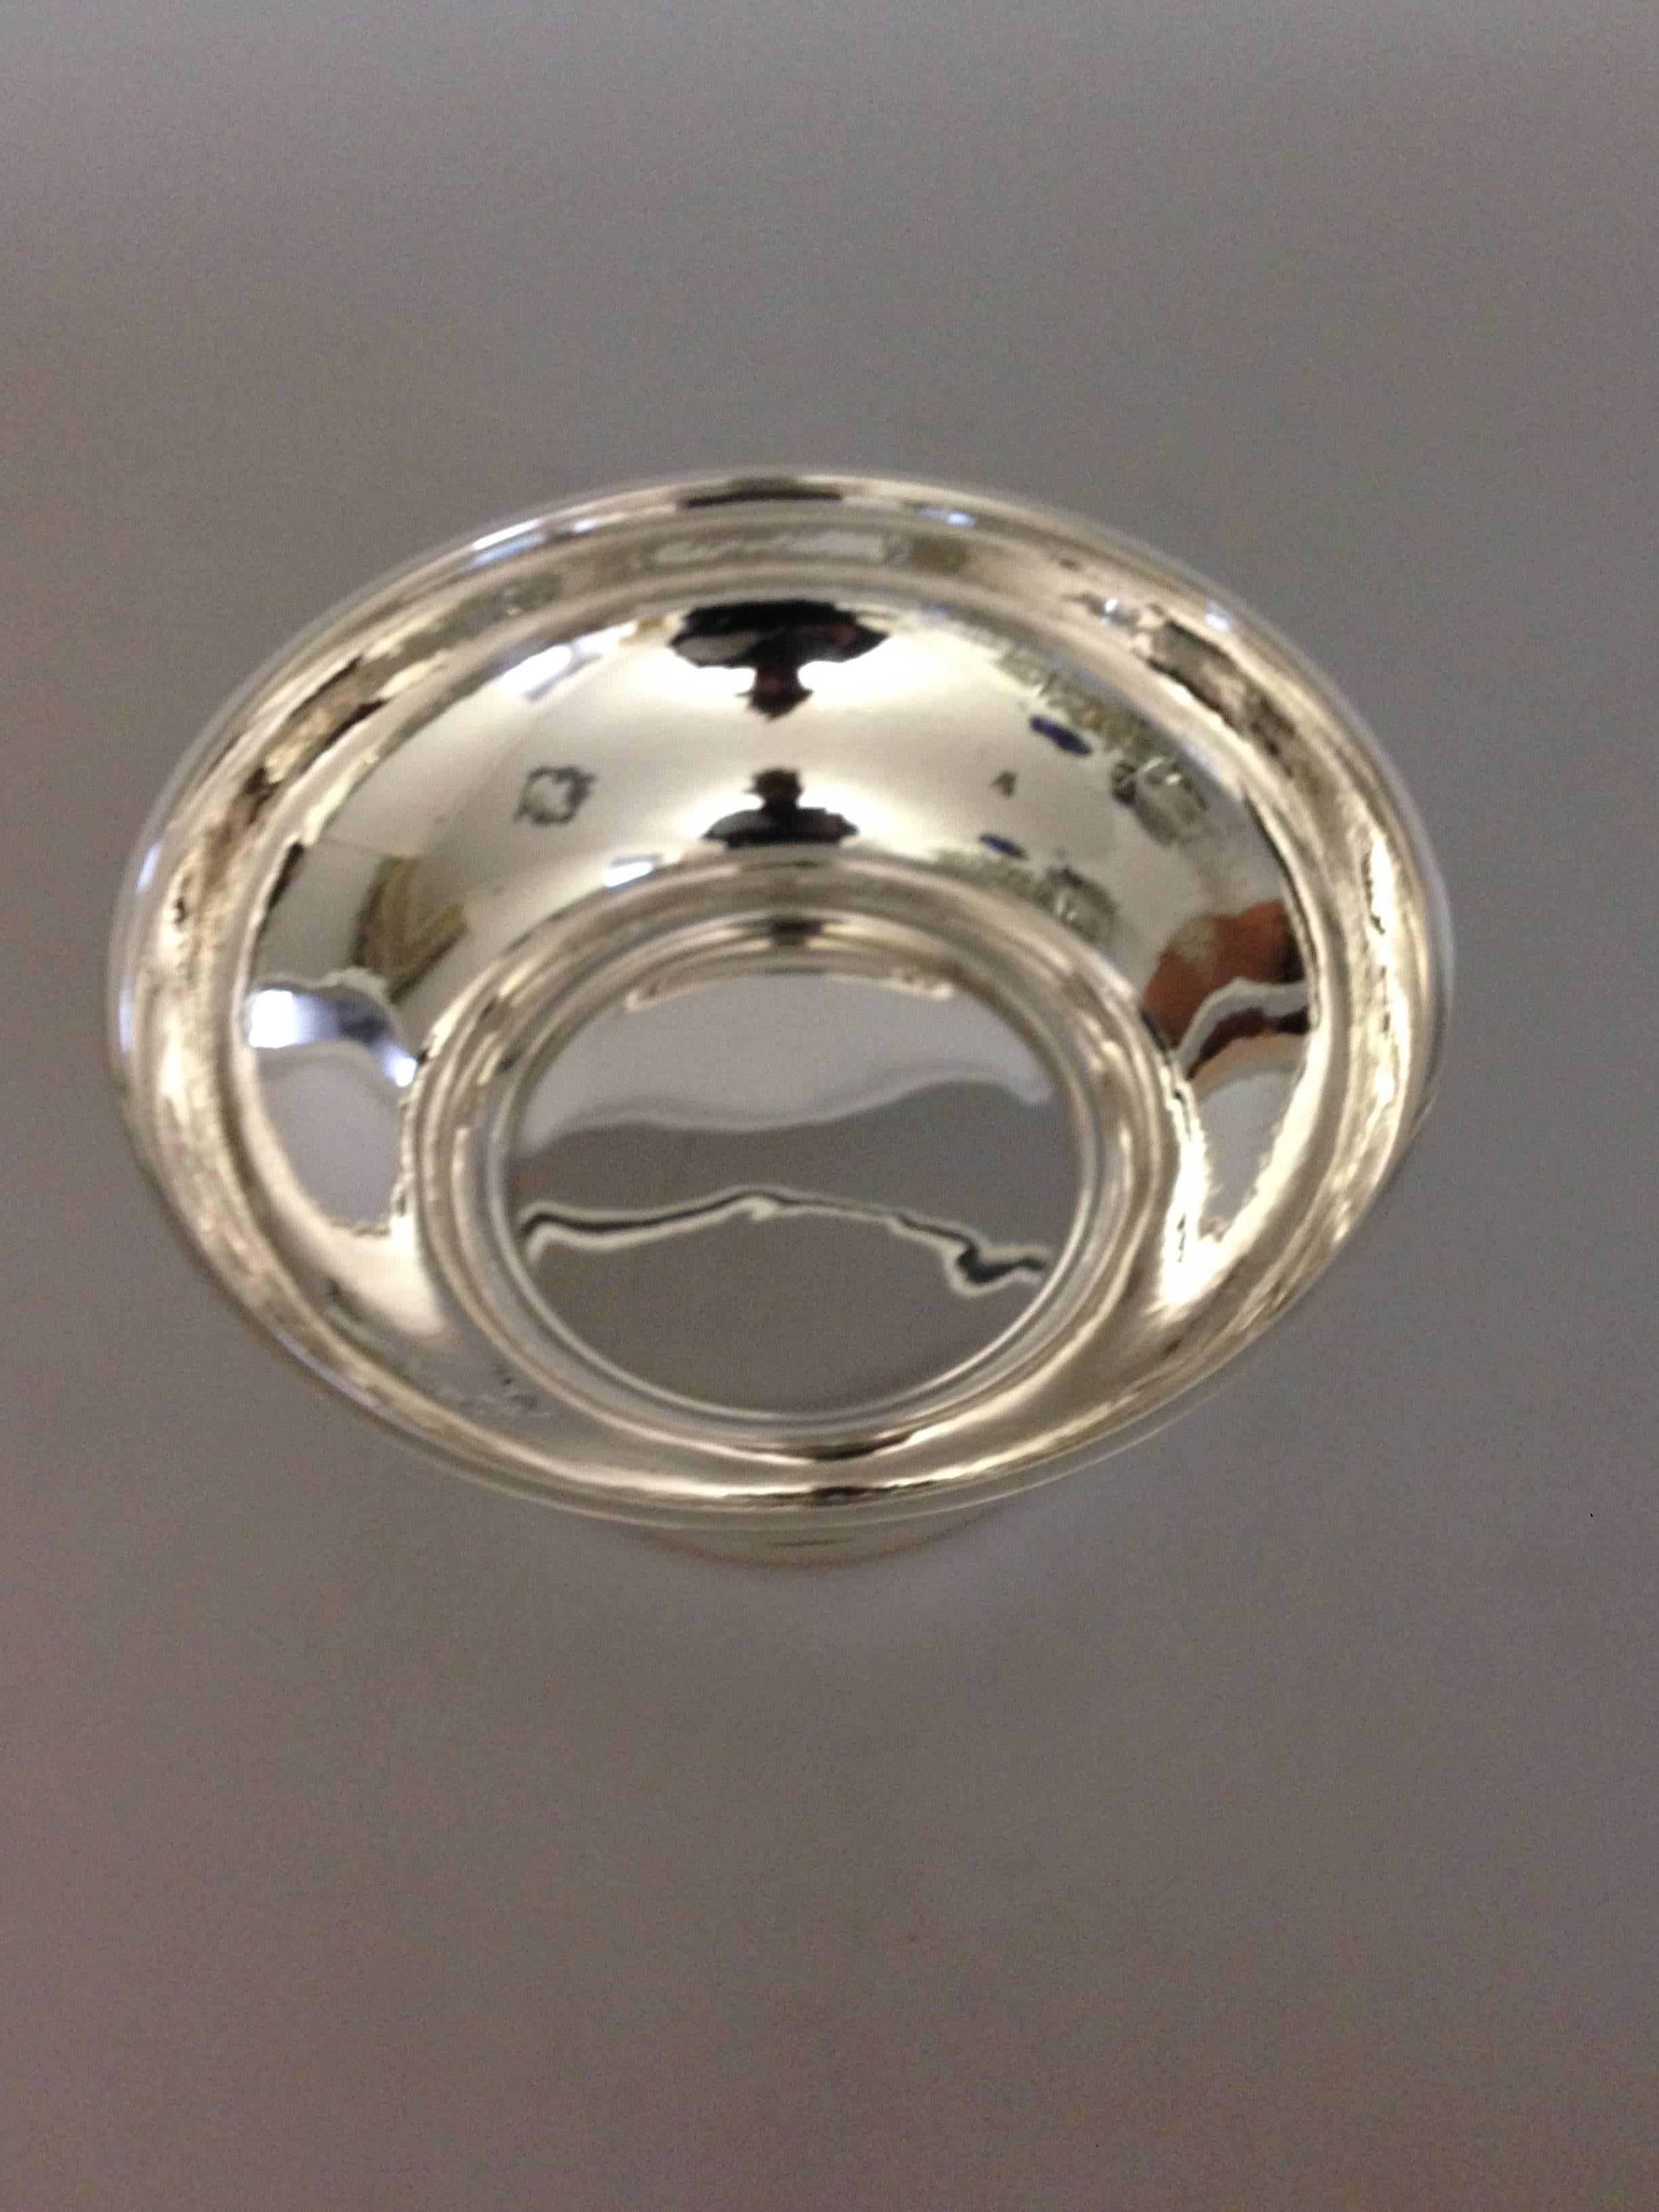 Georg Jensen sterling silver bowl #414C. Measures 22.2cm diameter and 10.7cm high. (8 3/4